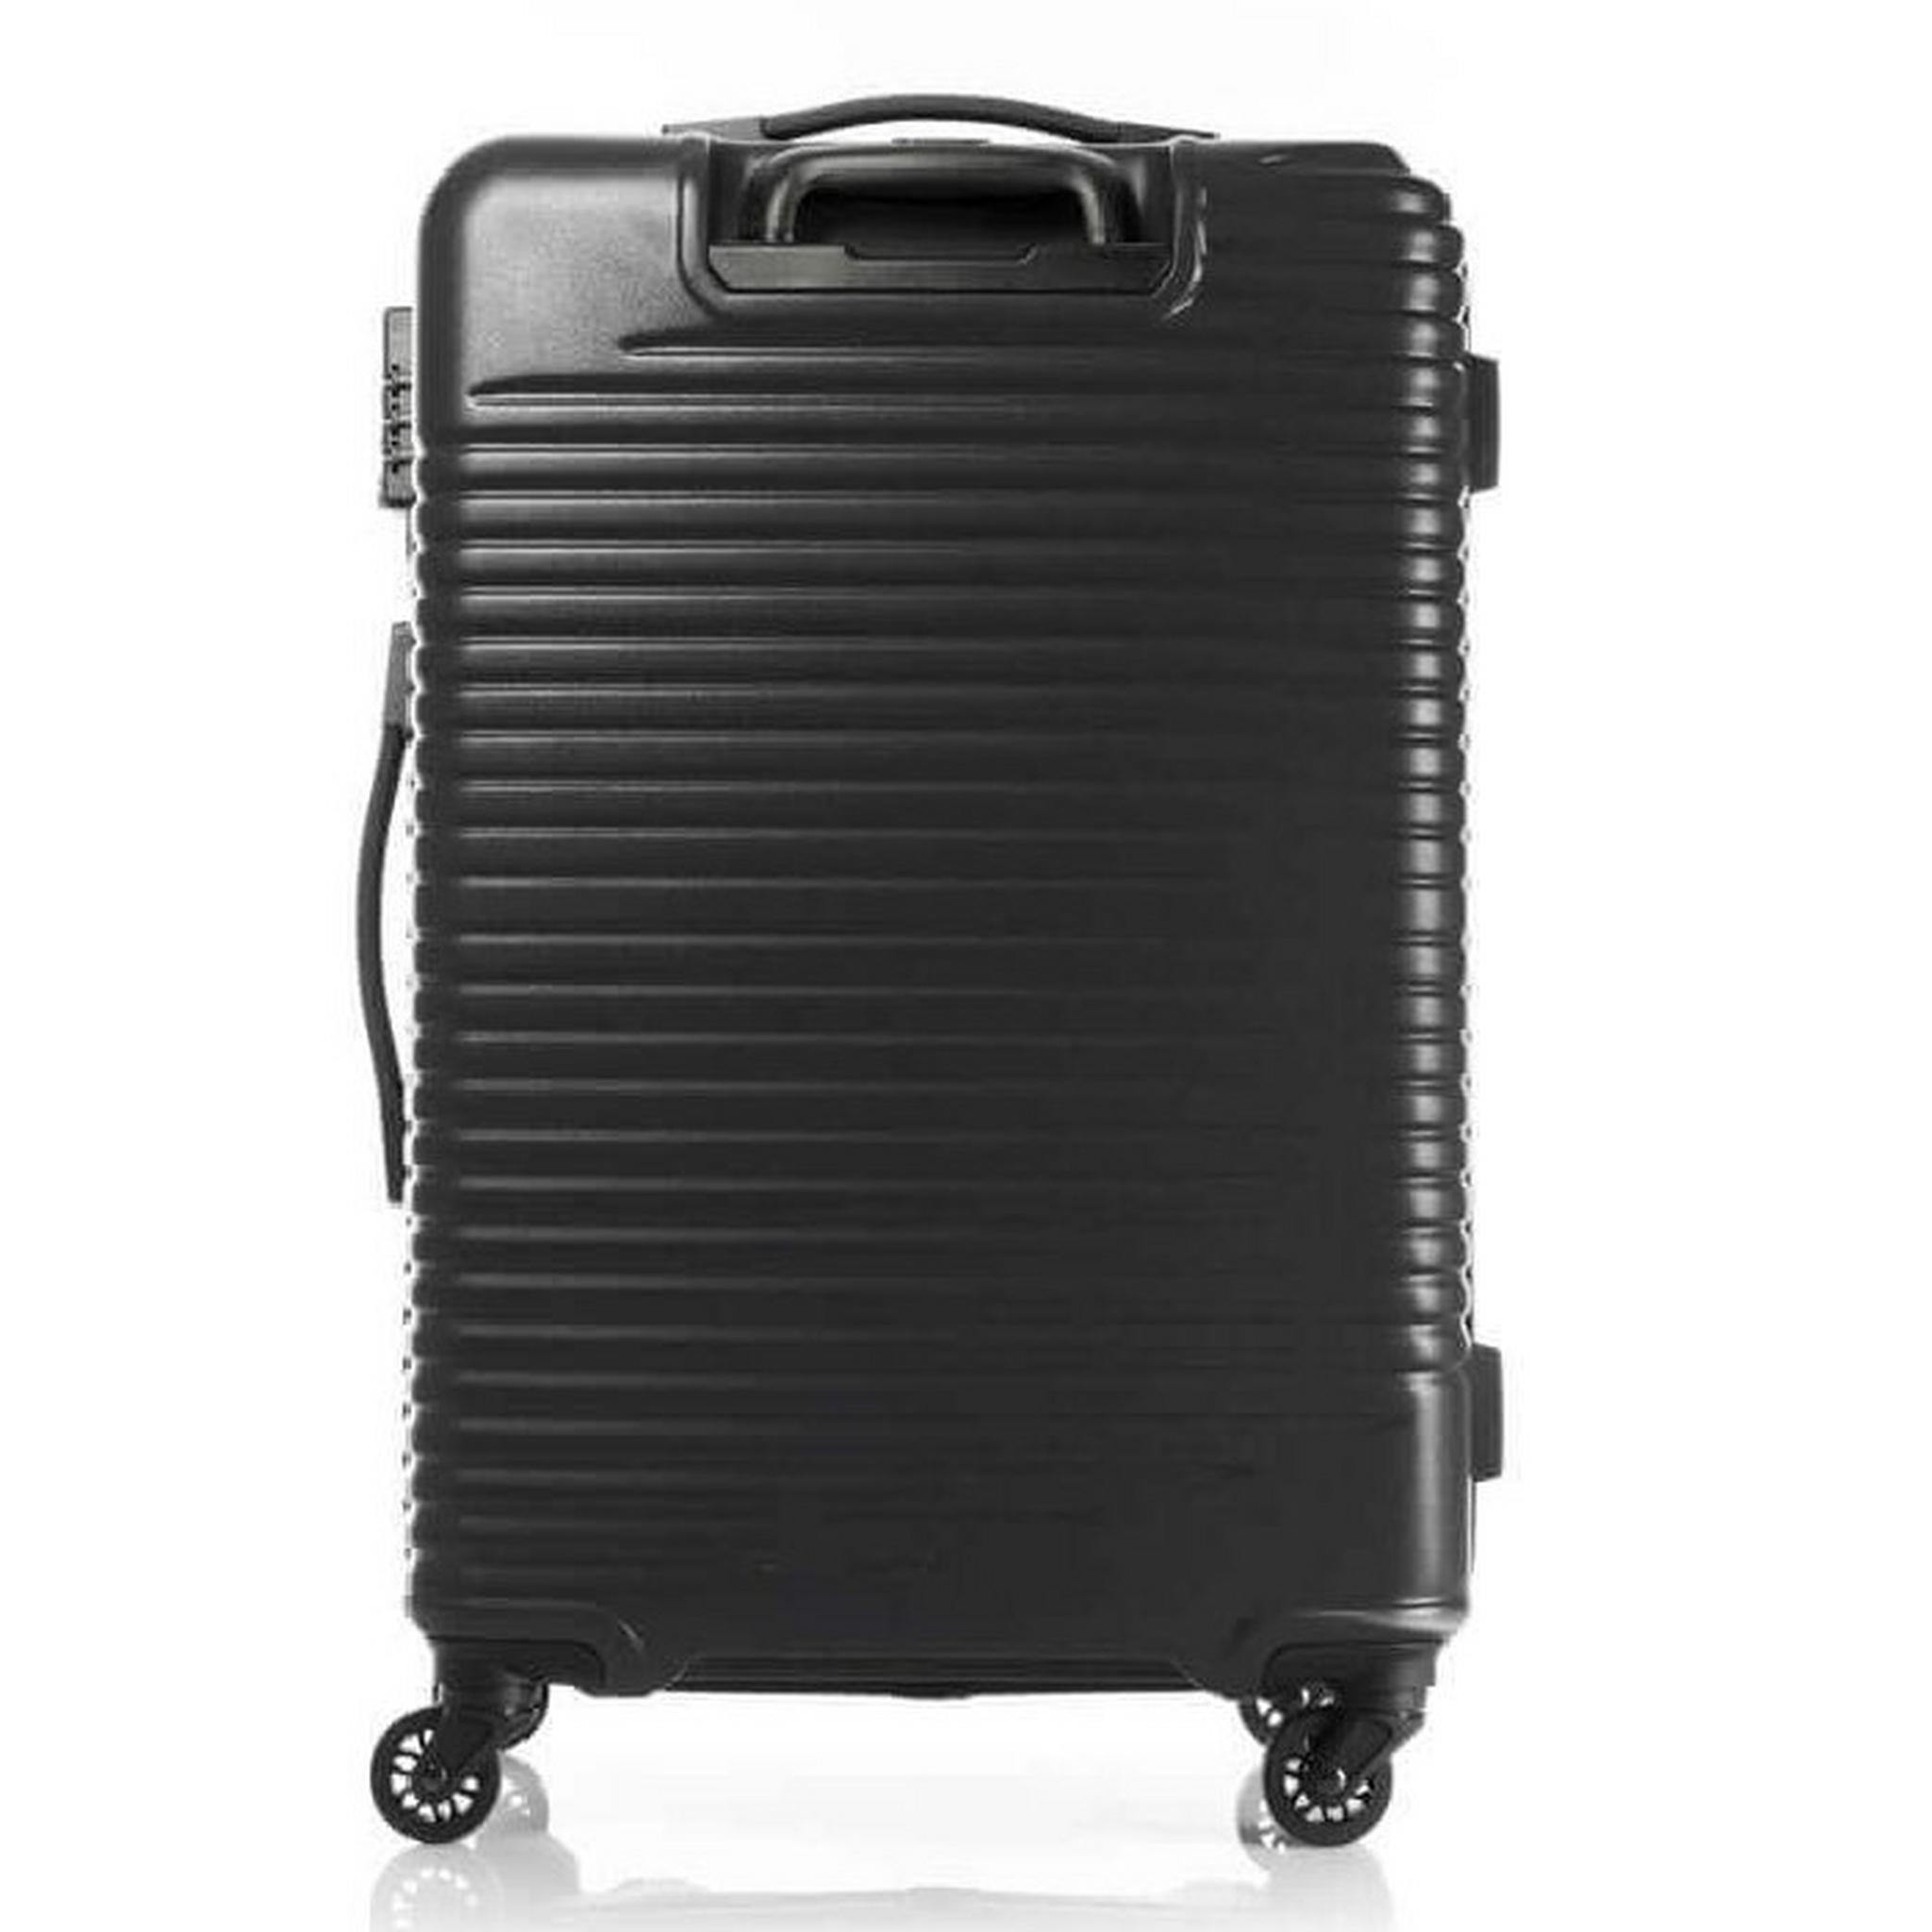 American Tourister 68cm Spinner Sky Park Hard Luggage - Black